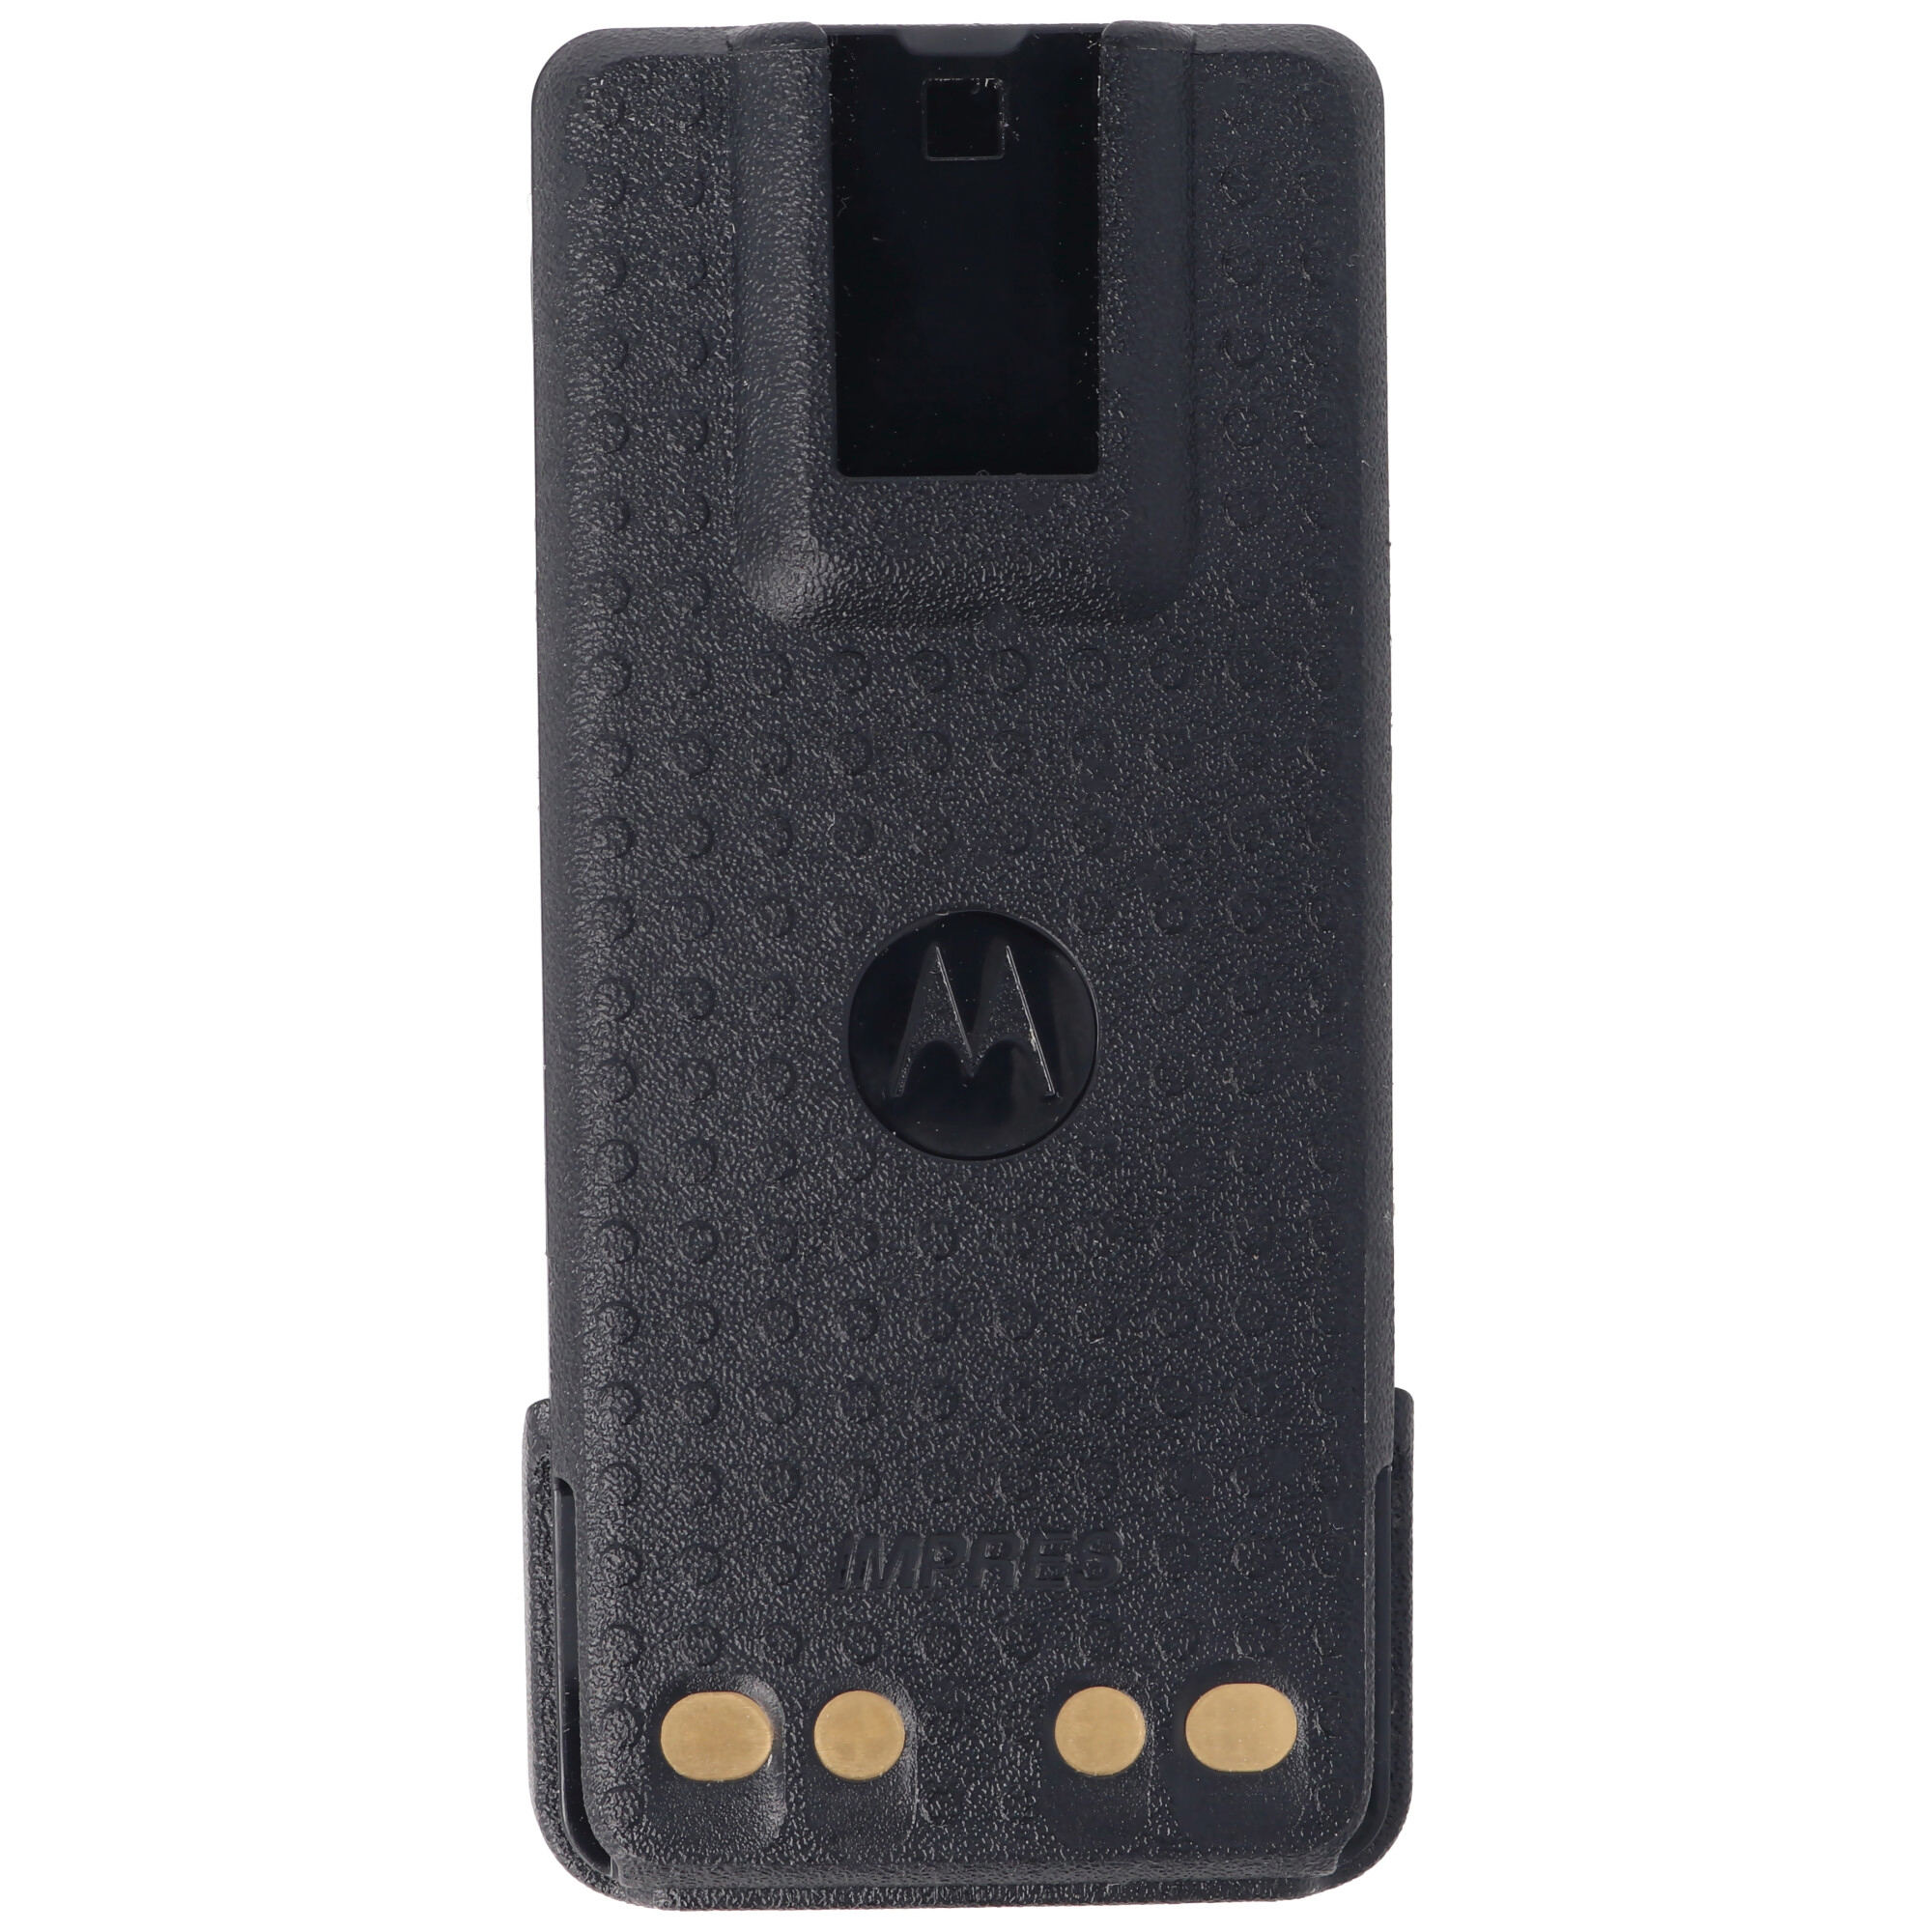 Originalakku Motorola SLIM Li-Ion IMPRES Akku für Motorola DP2000, DP4000 Serie, PMNN4491B, IP68, 7,4V 2100mAh